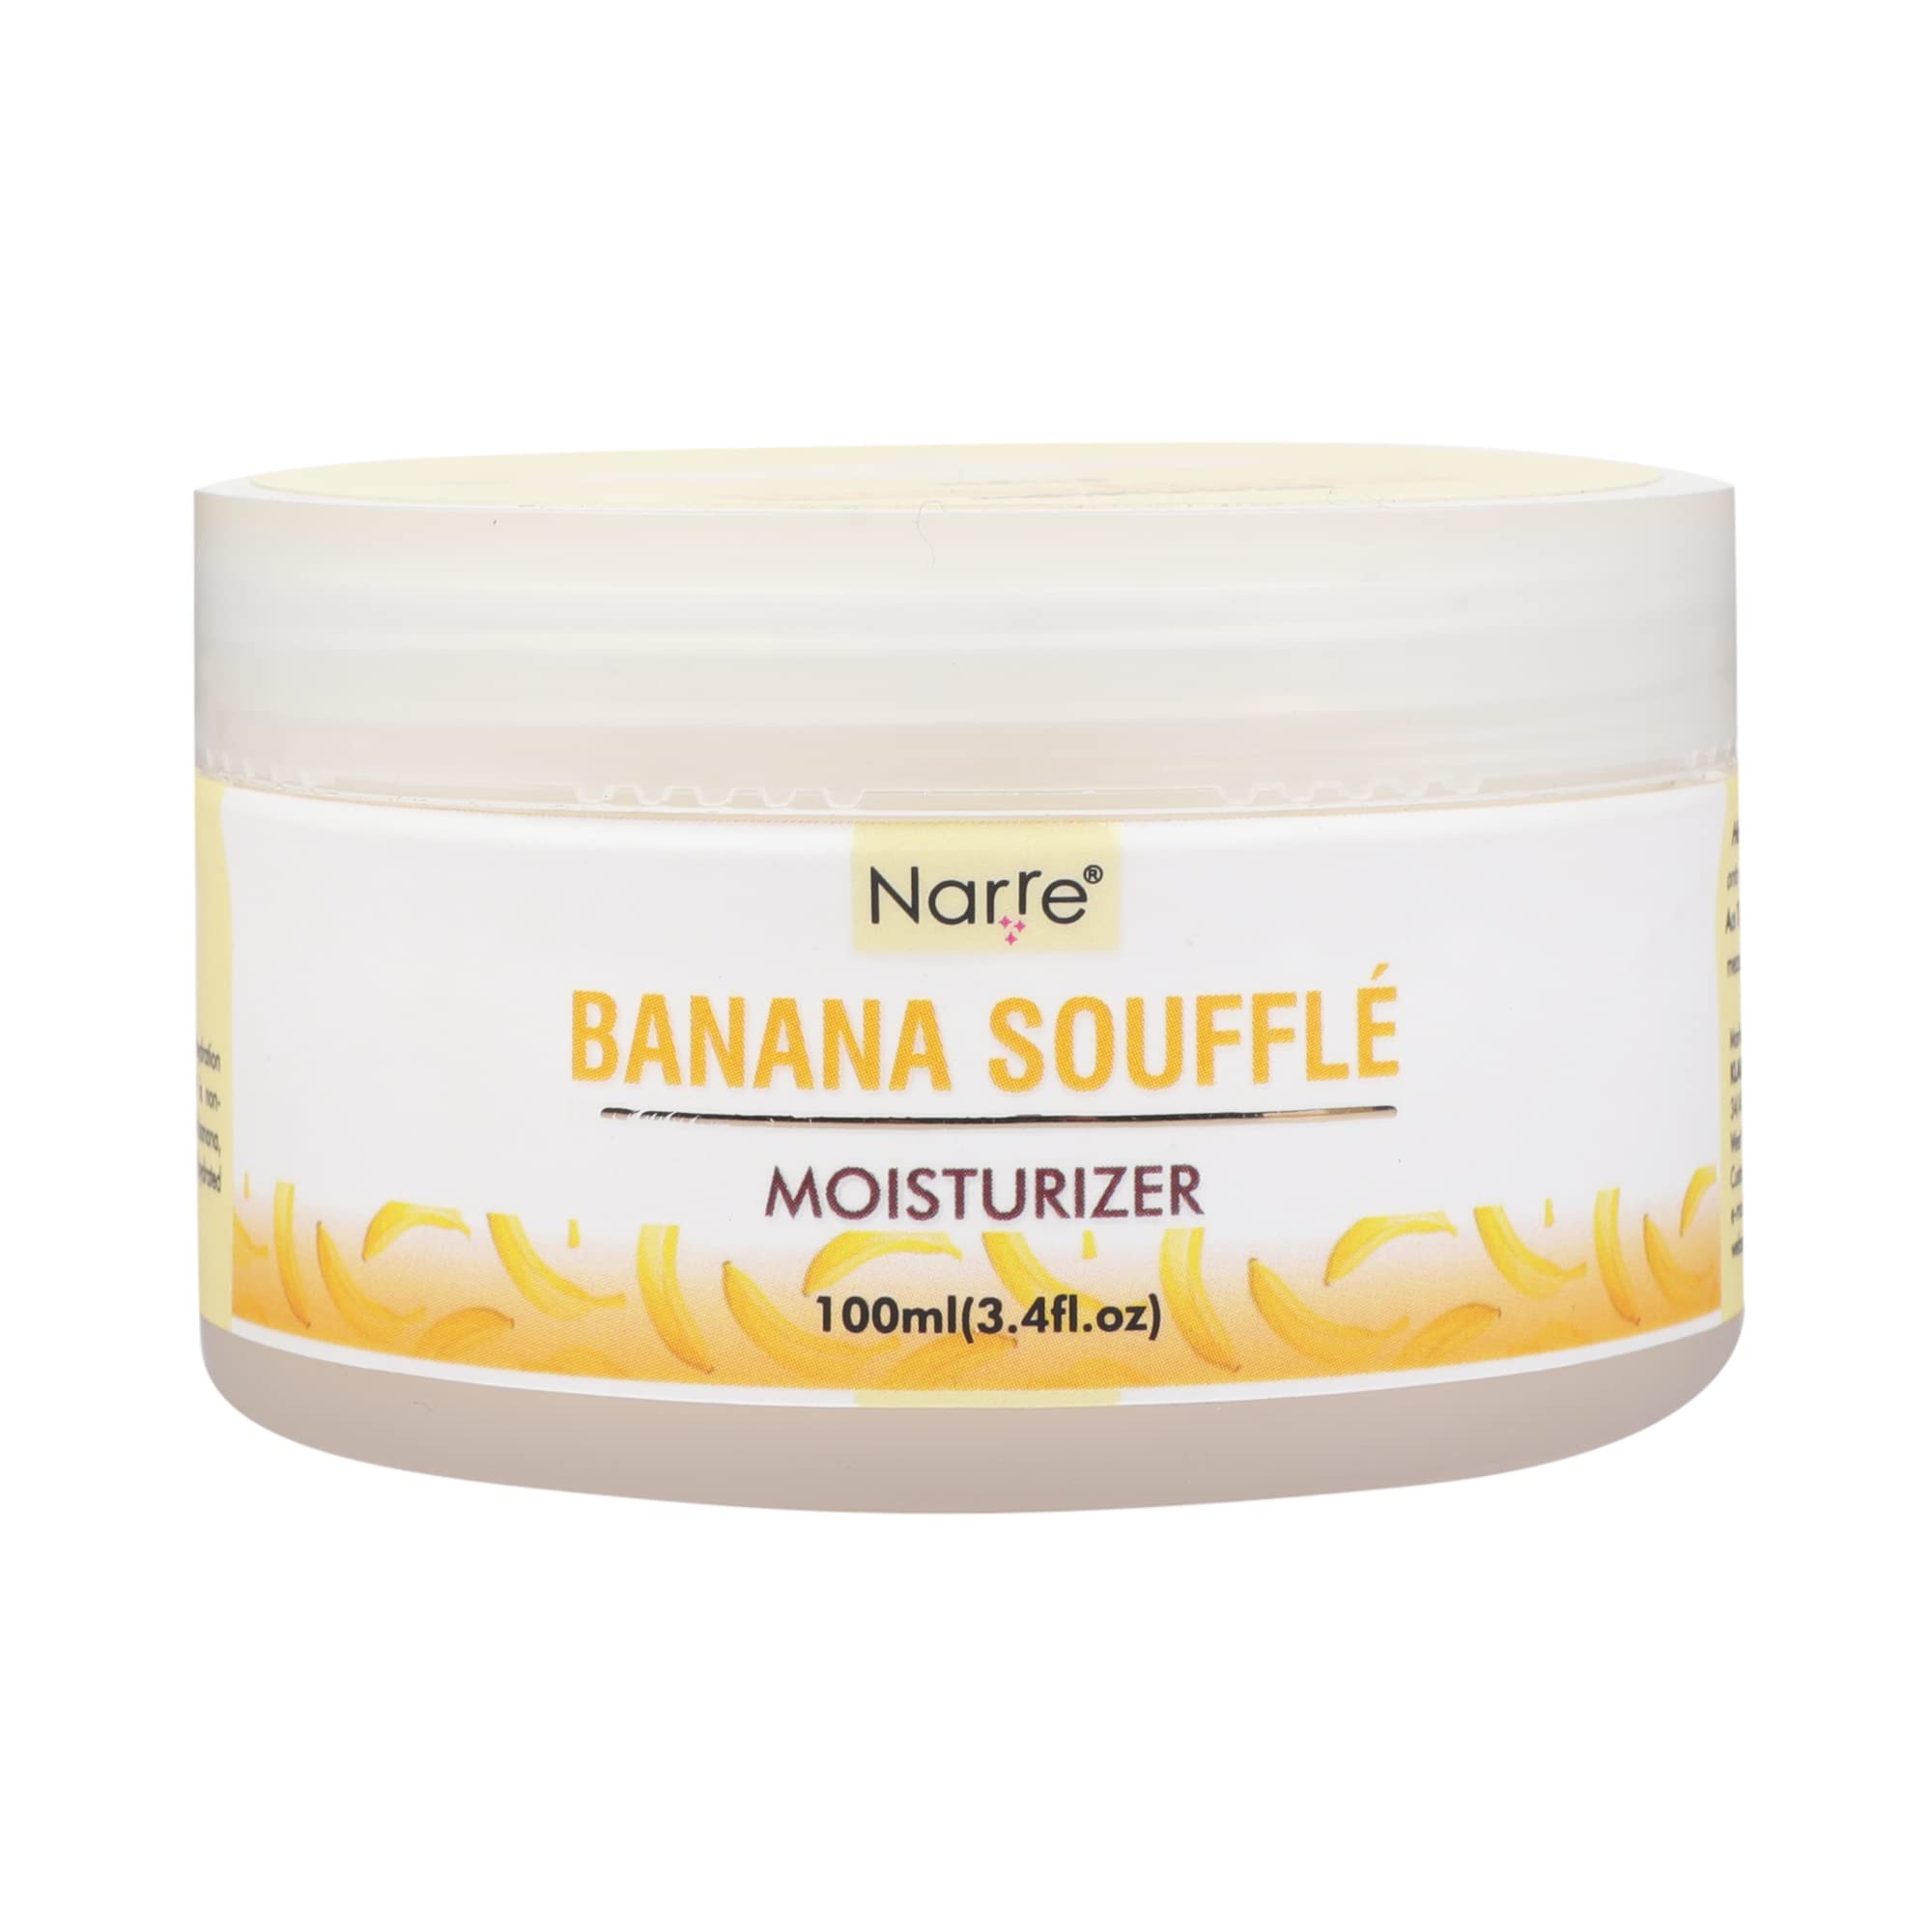 Narre Banana Souffle Moisturizer